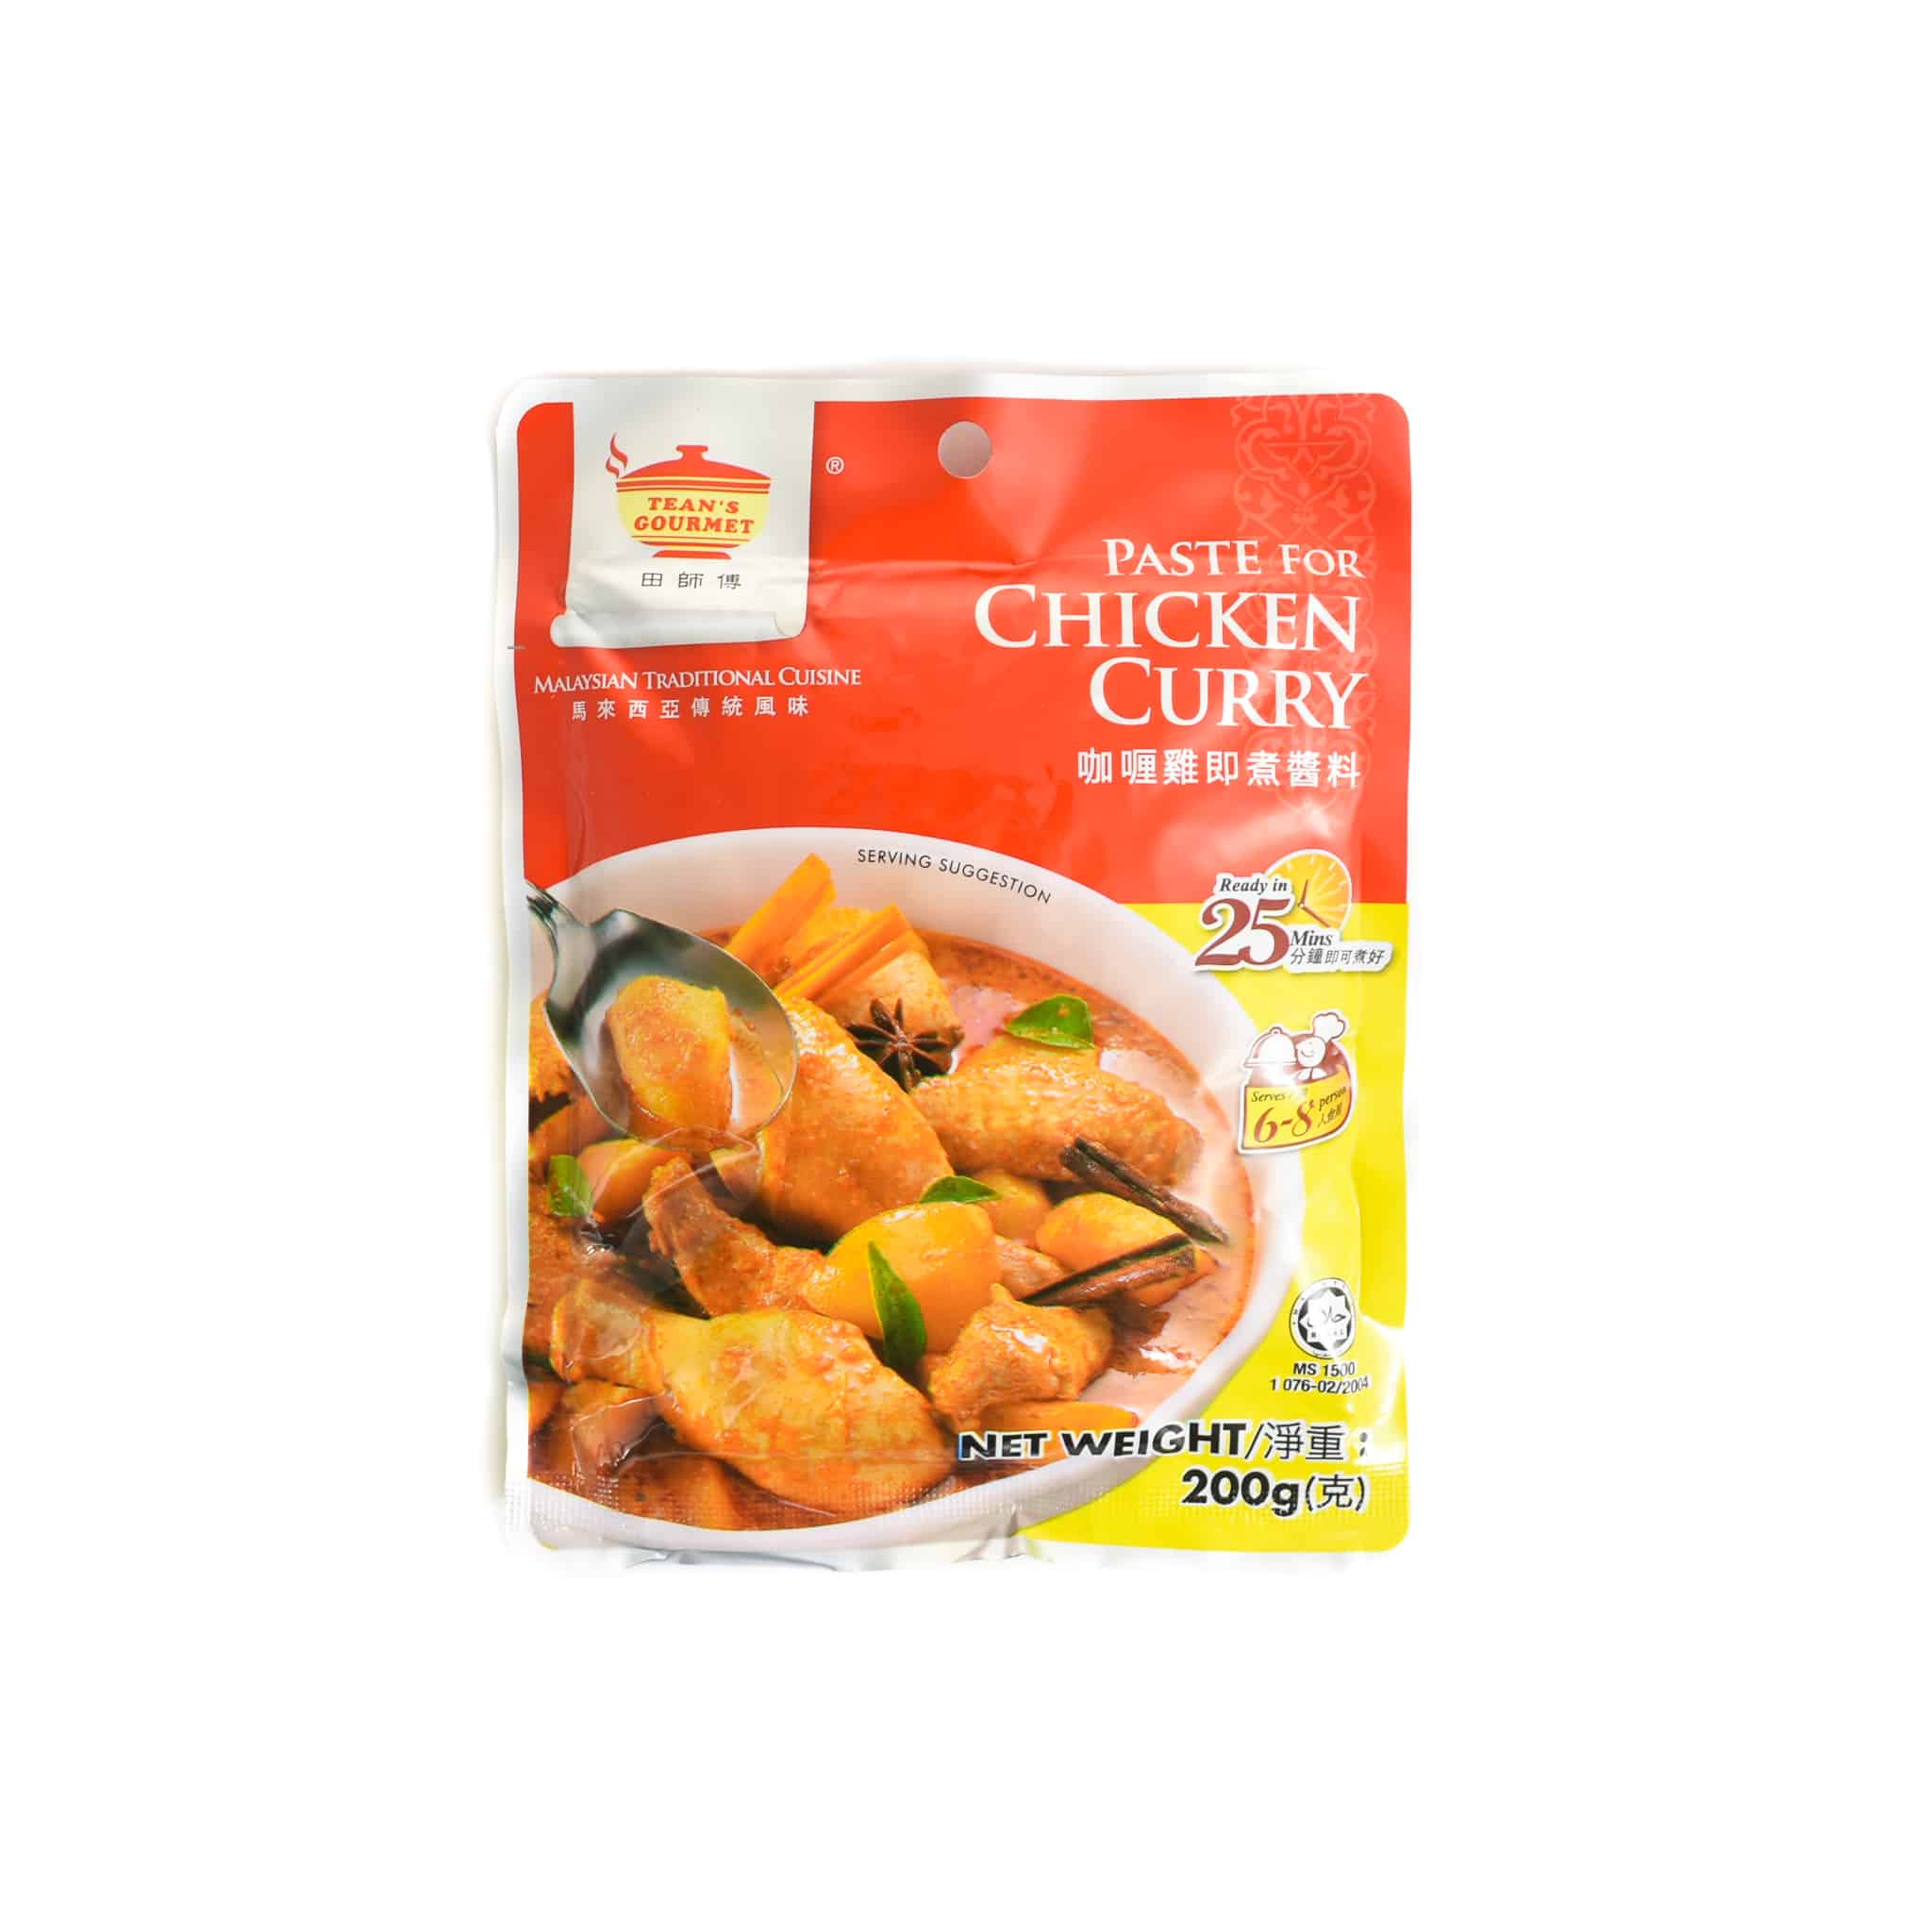 Tumisan Kari Ayam Paste for Chicken Curry, 200g